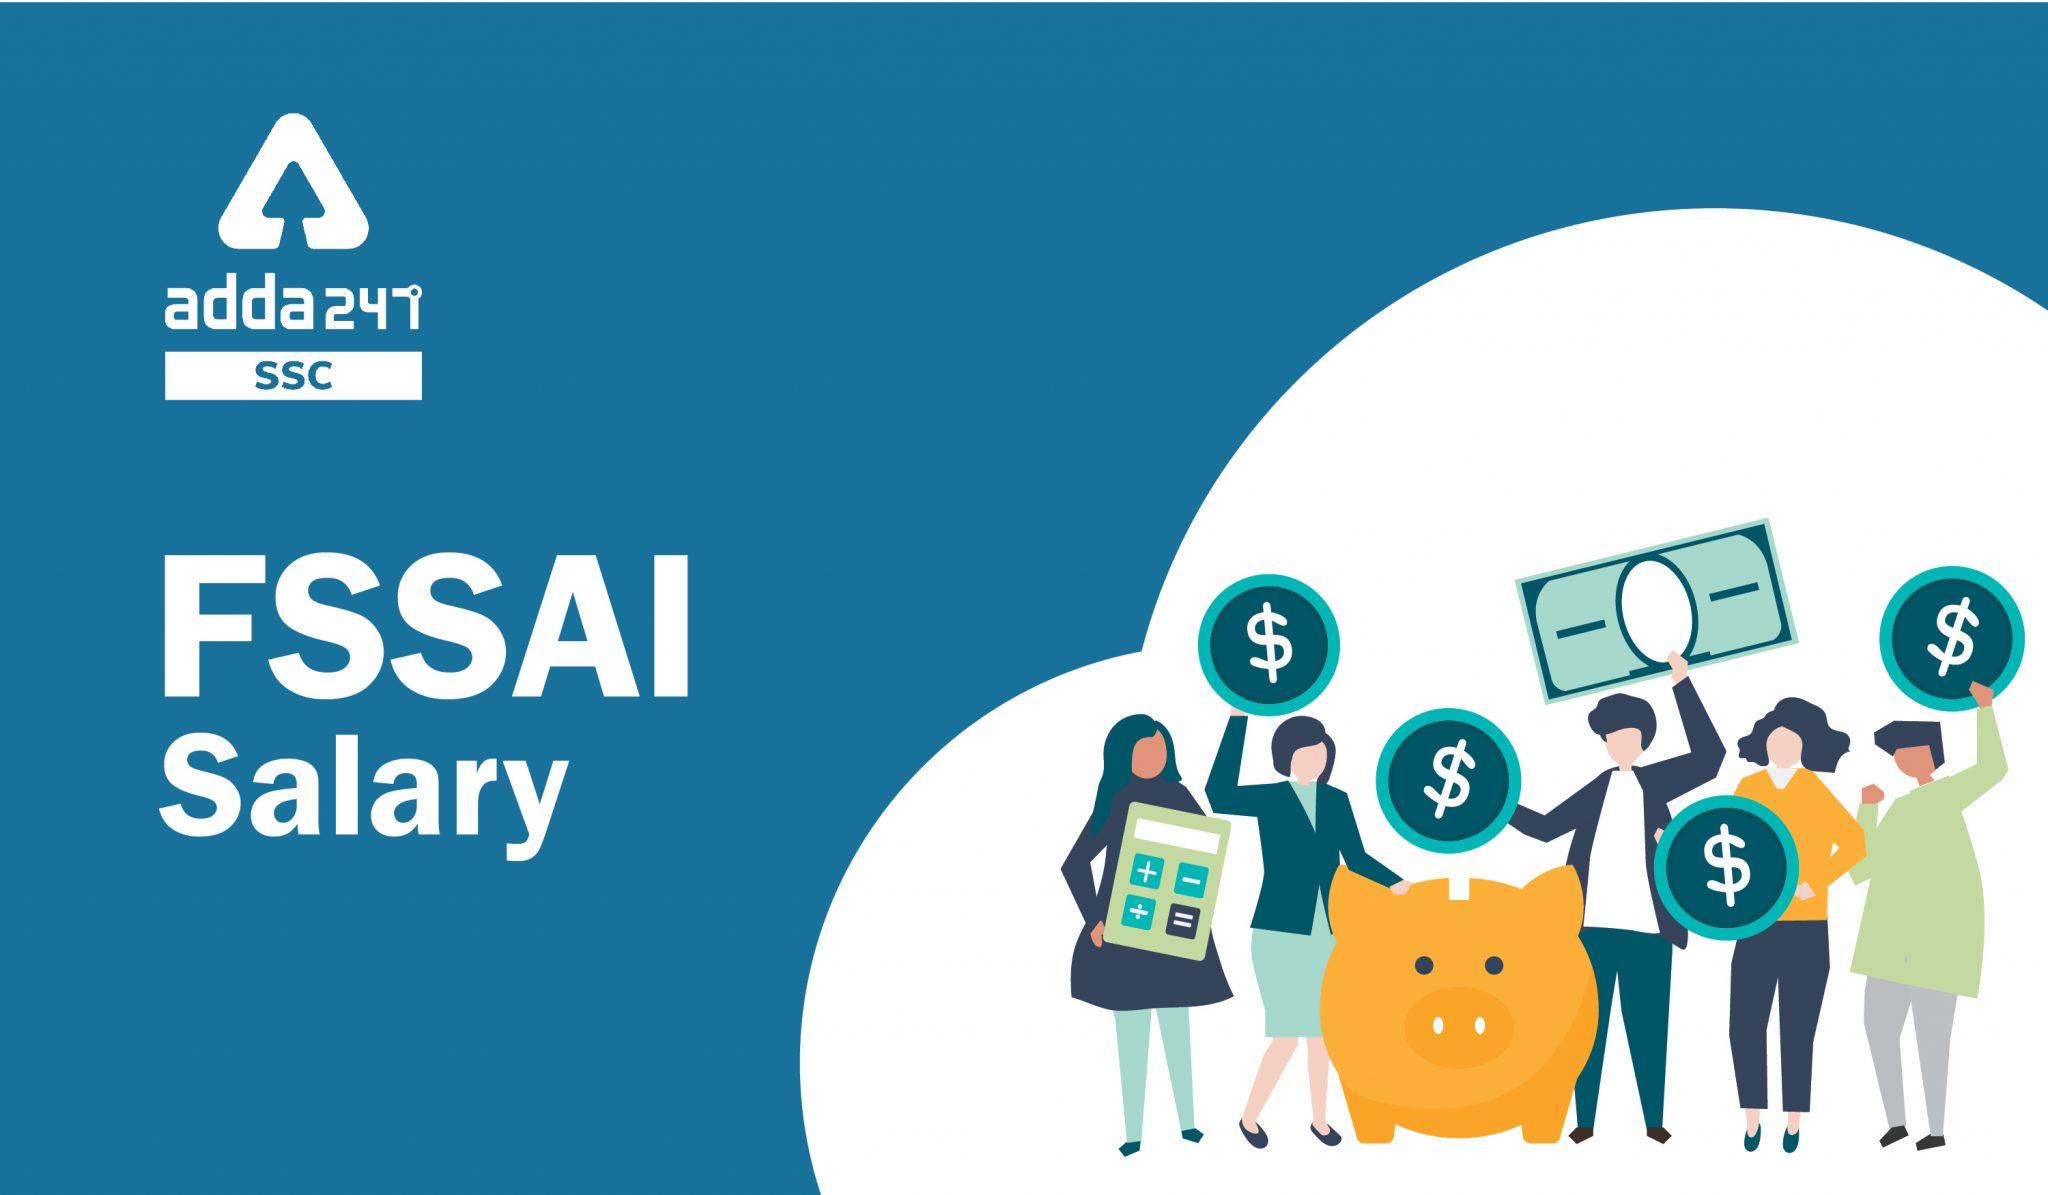 FSSAI Salary 2021: Check Post-wise FSSAI Salary